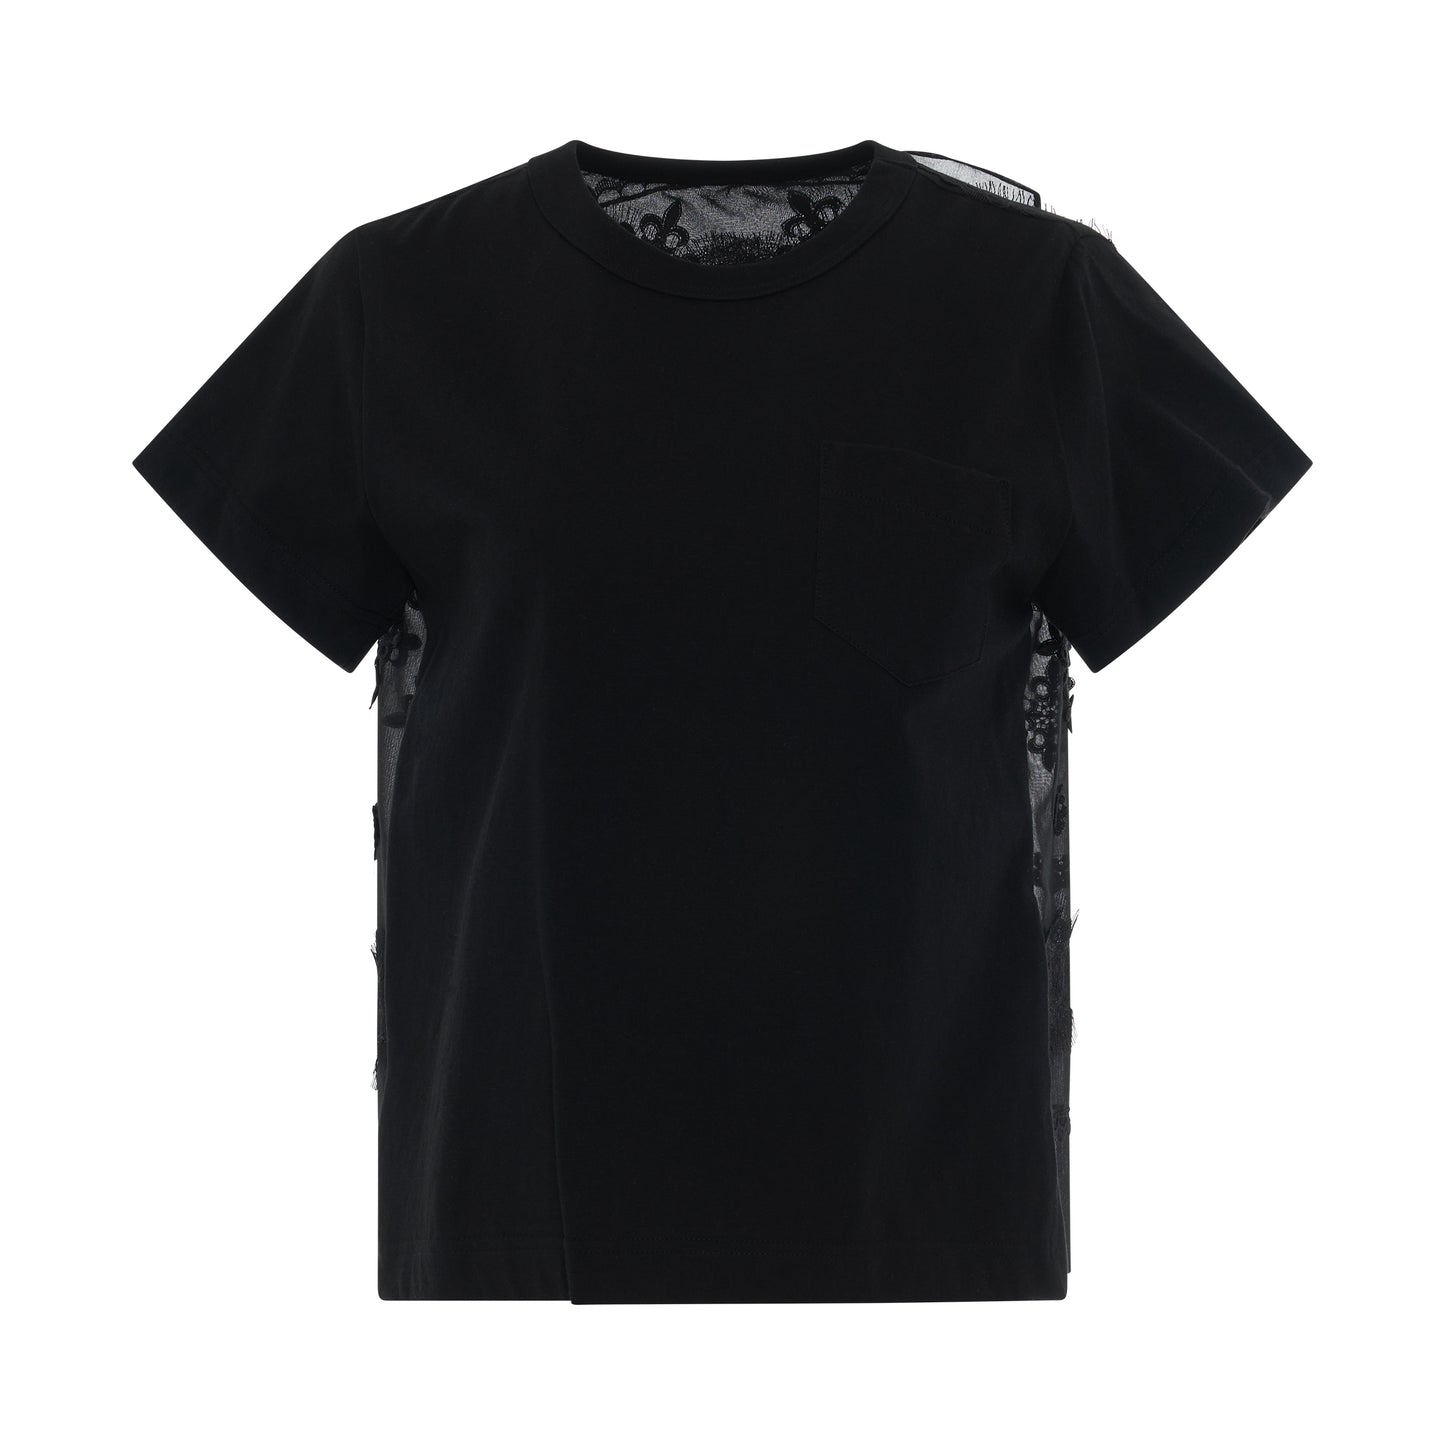 Bandana Lace T-Shirt in Black